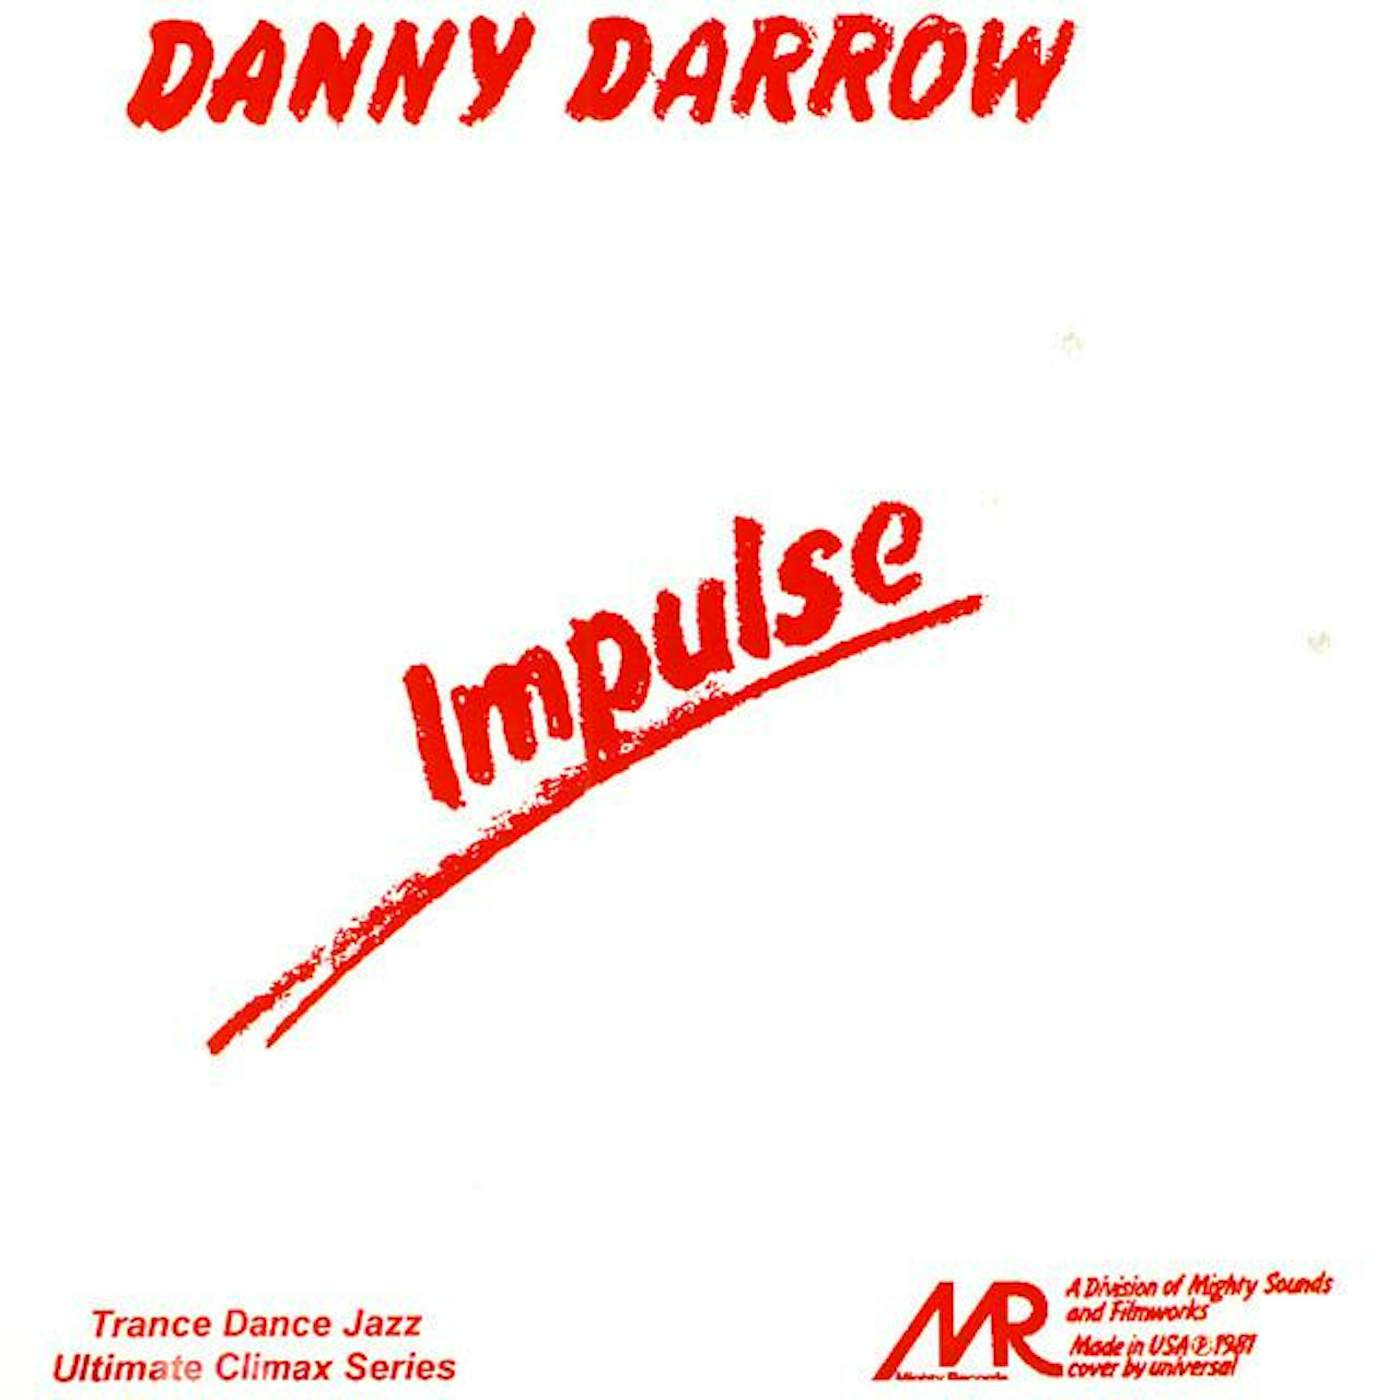 Danny Darrow